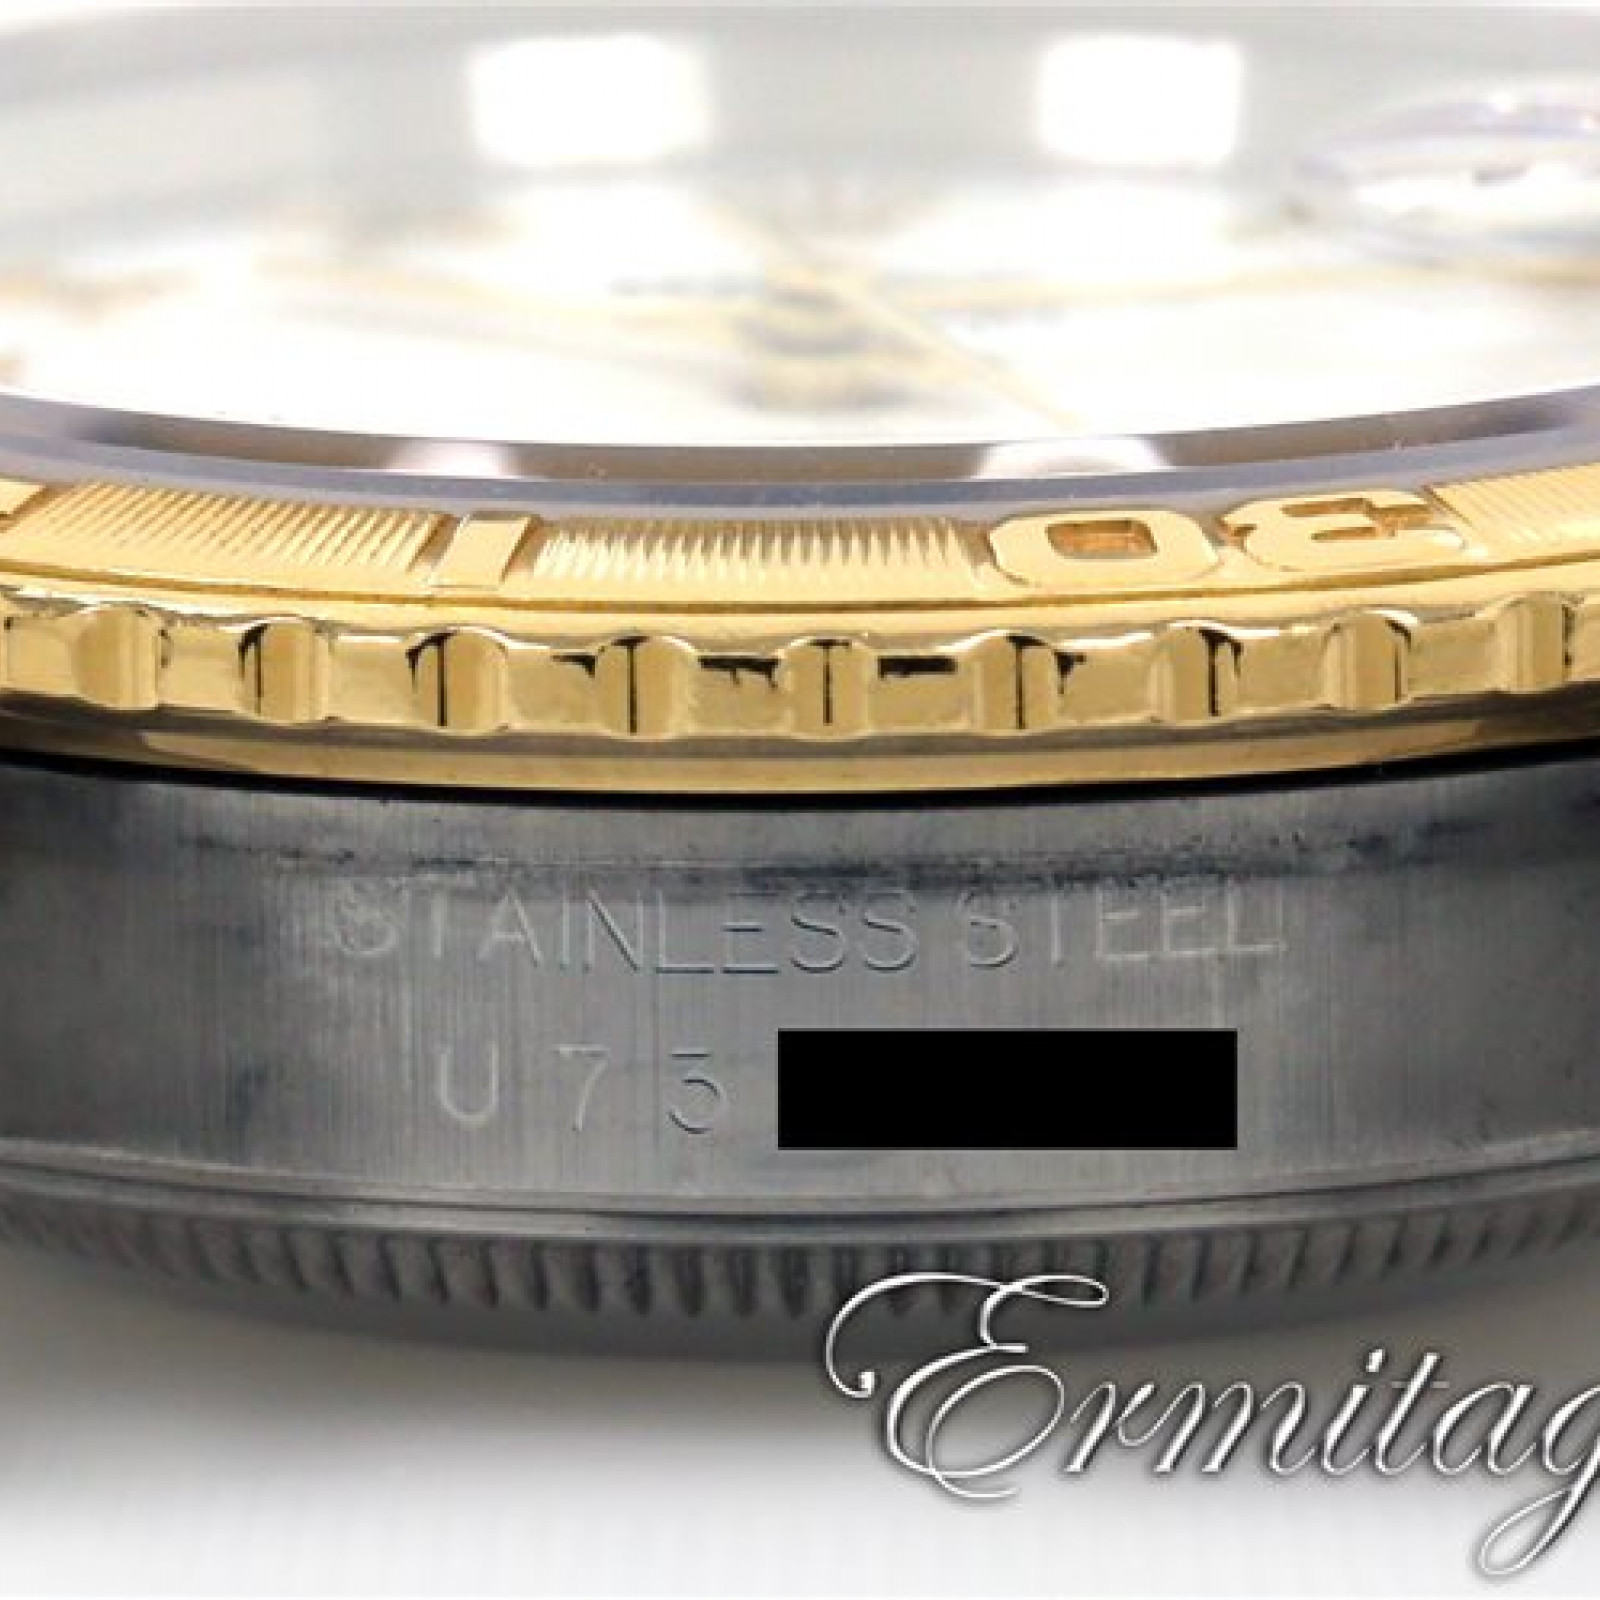 Turn-O-Graph Rolex Datejust 16263 Gold & Steel